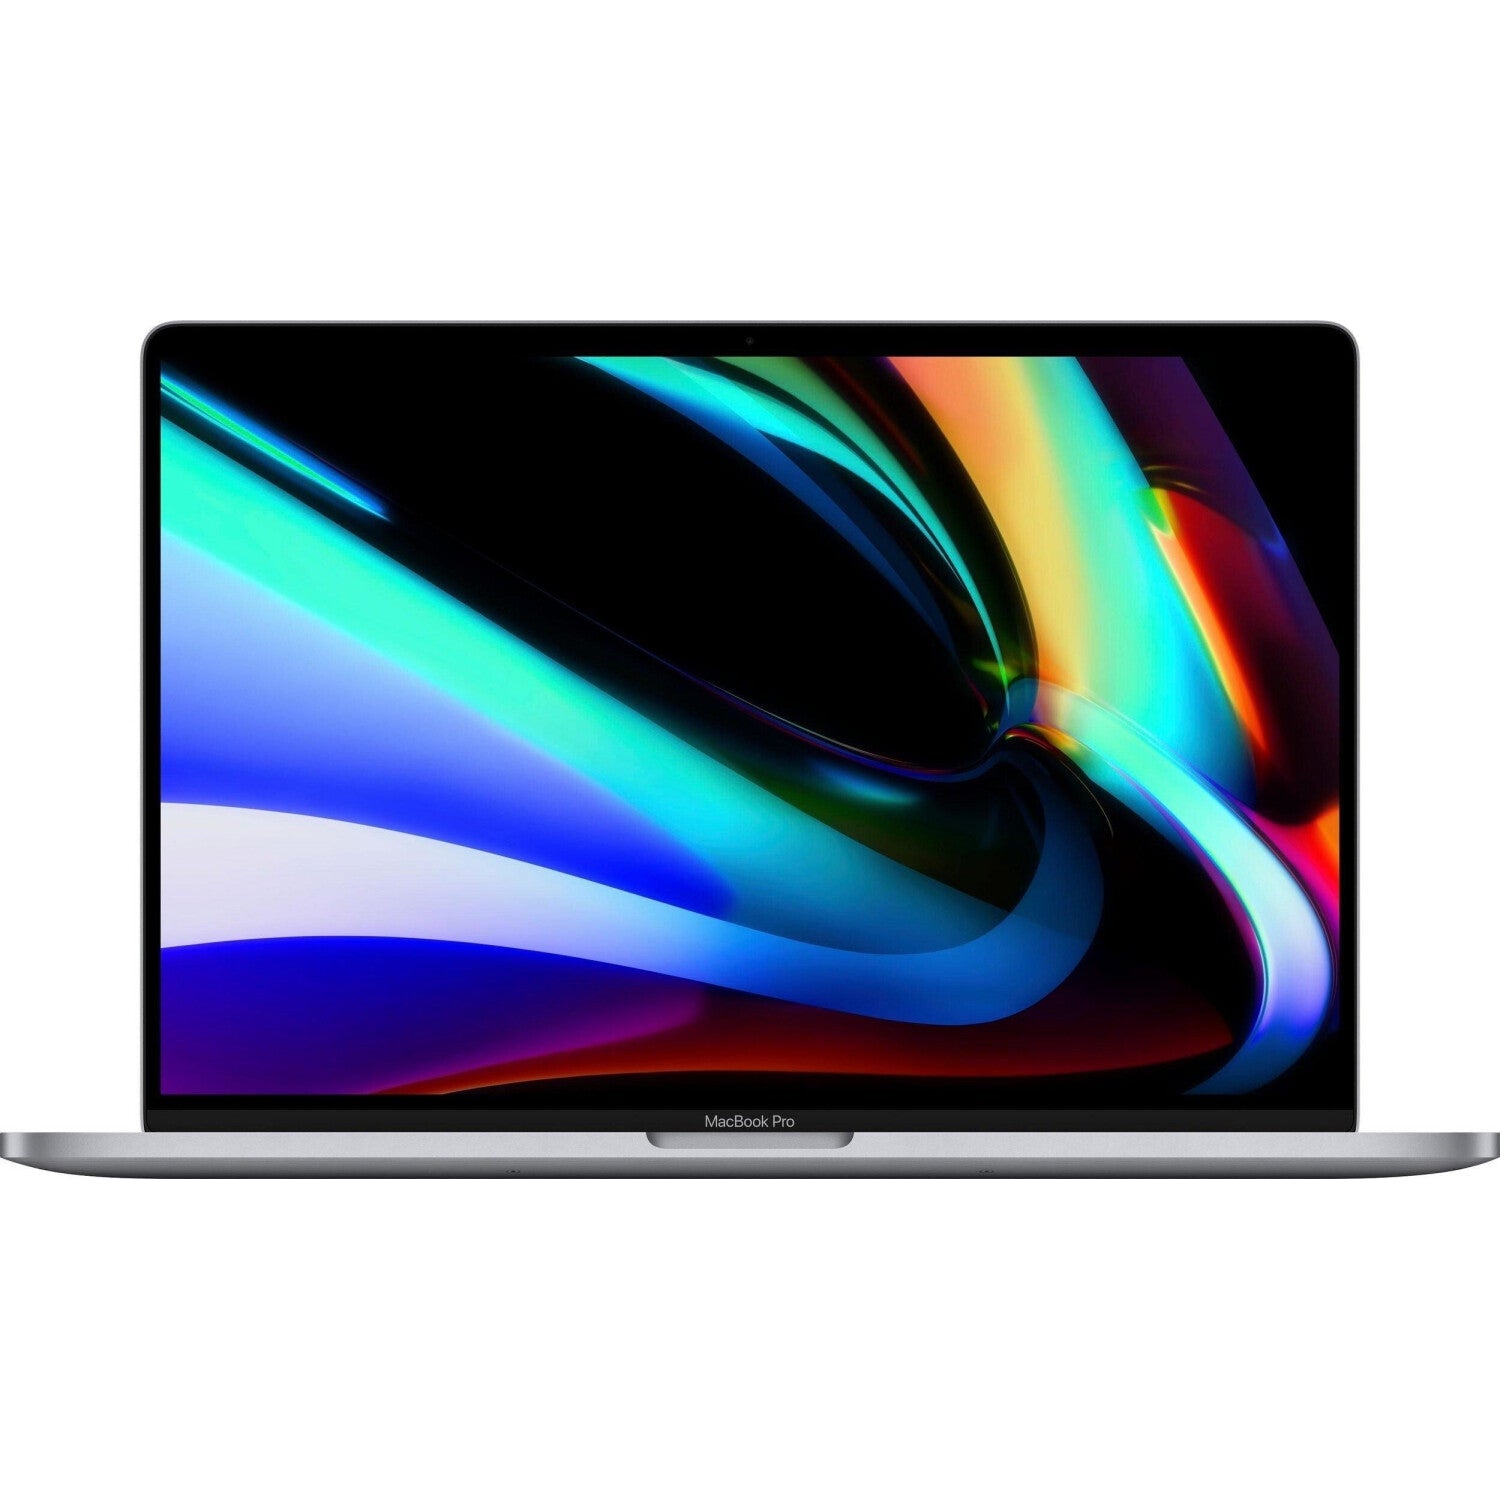 Apple MacBook Pro 16" MVVJ2B/A (2019) Laptop, Intel Core i7, 16GB, 512GB, Space Grey - Refurbished Good